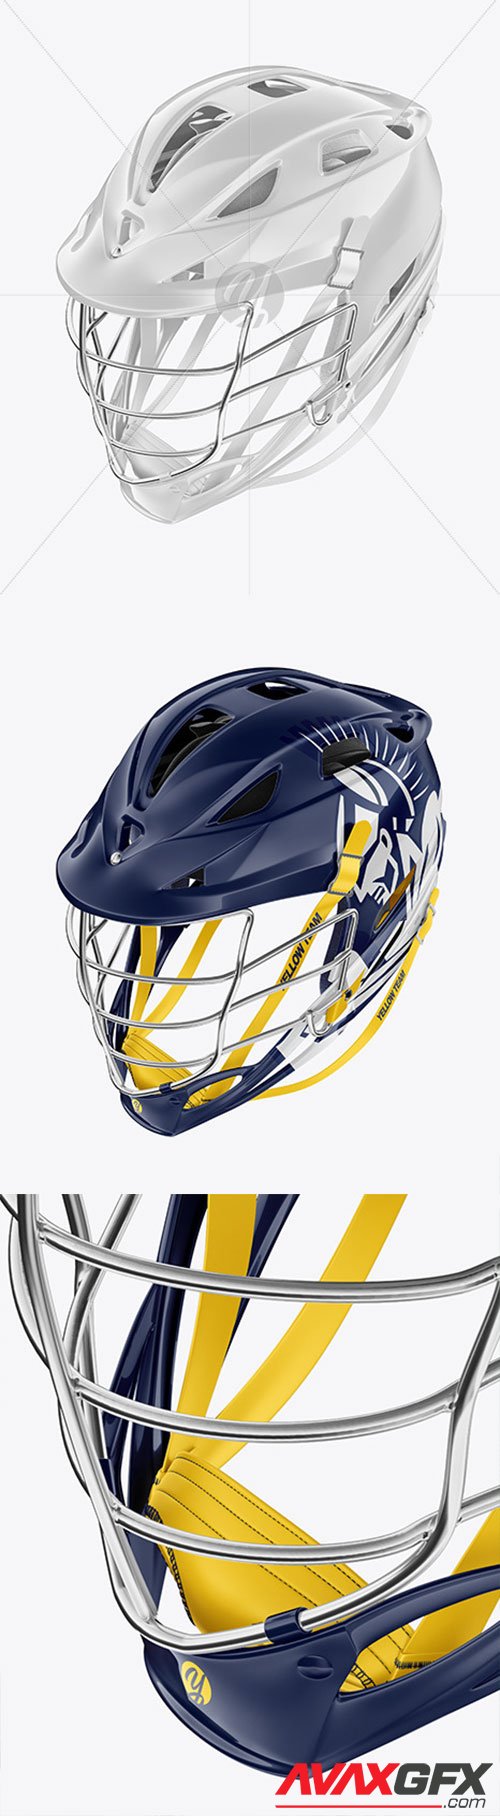 Lacrosse Helmet Mockup 61608